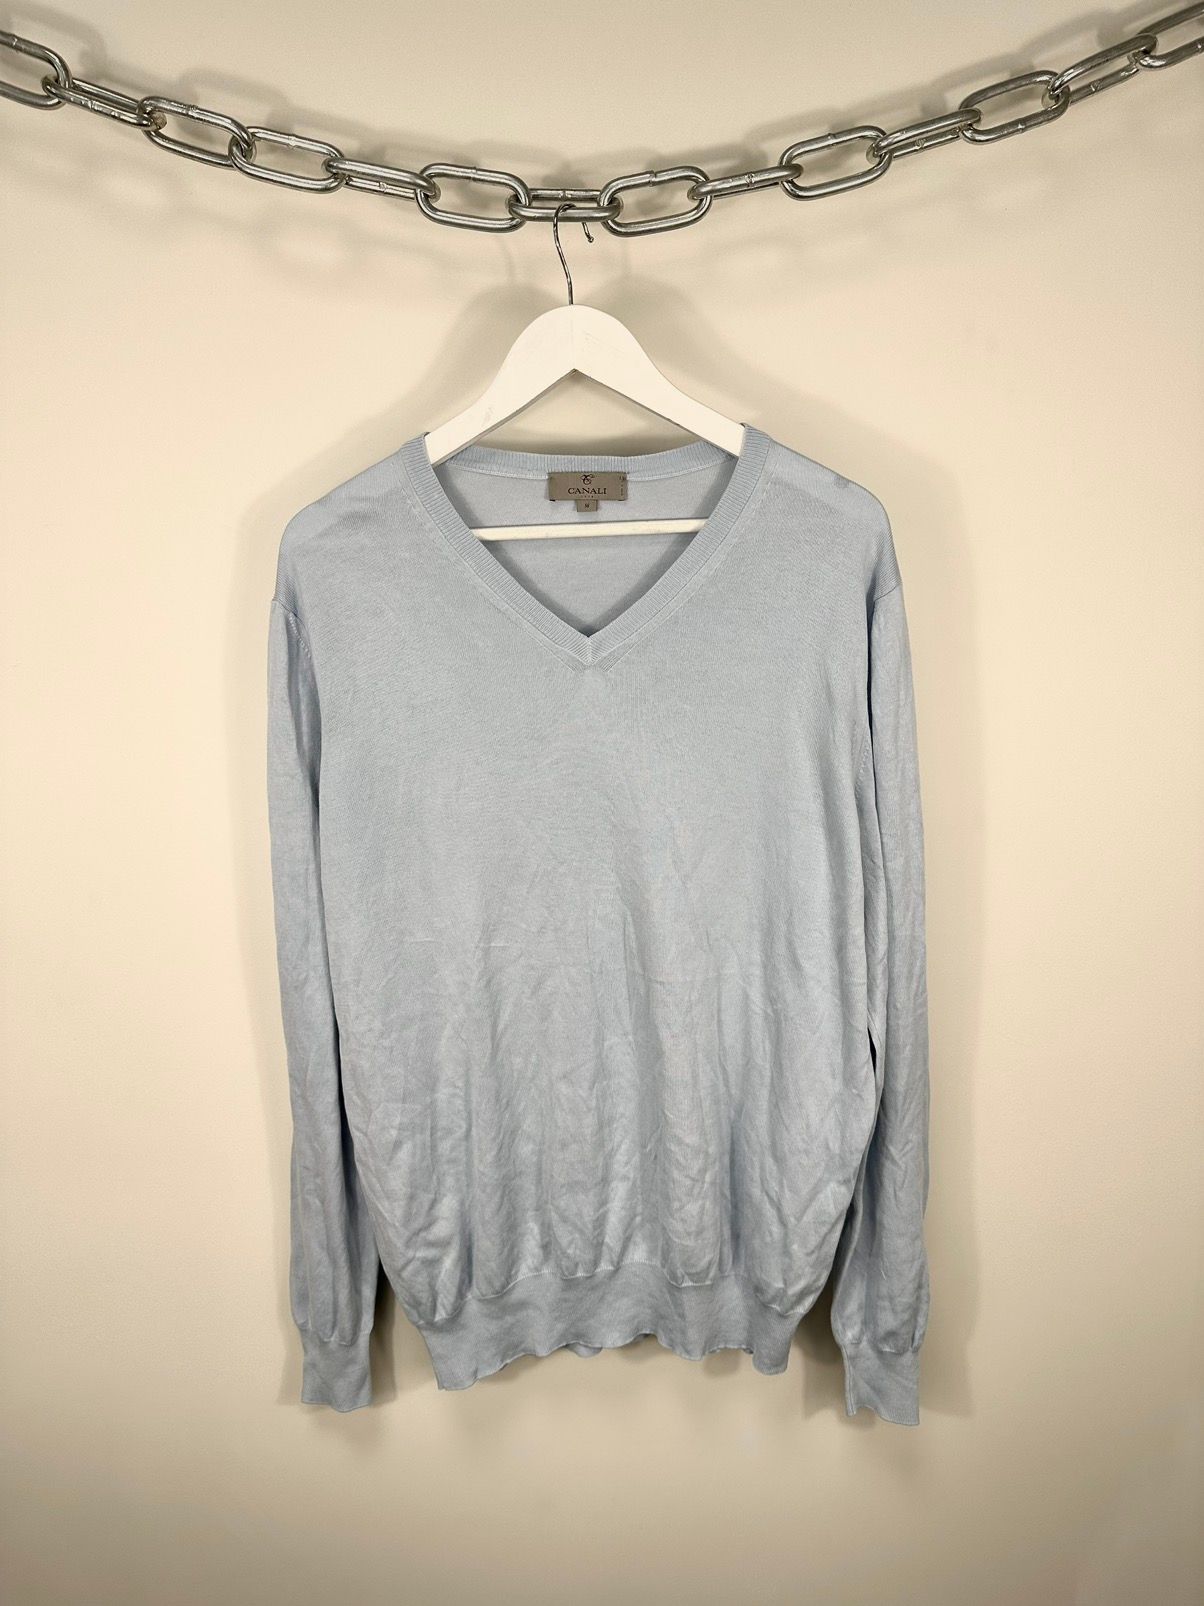 Pre-owned Canali X Italian Designers Vintage Canali Sweater Luxury Cardigan Sweatshirt Crewneck In Light Blue